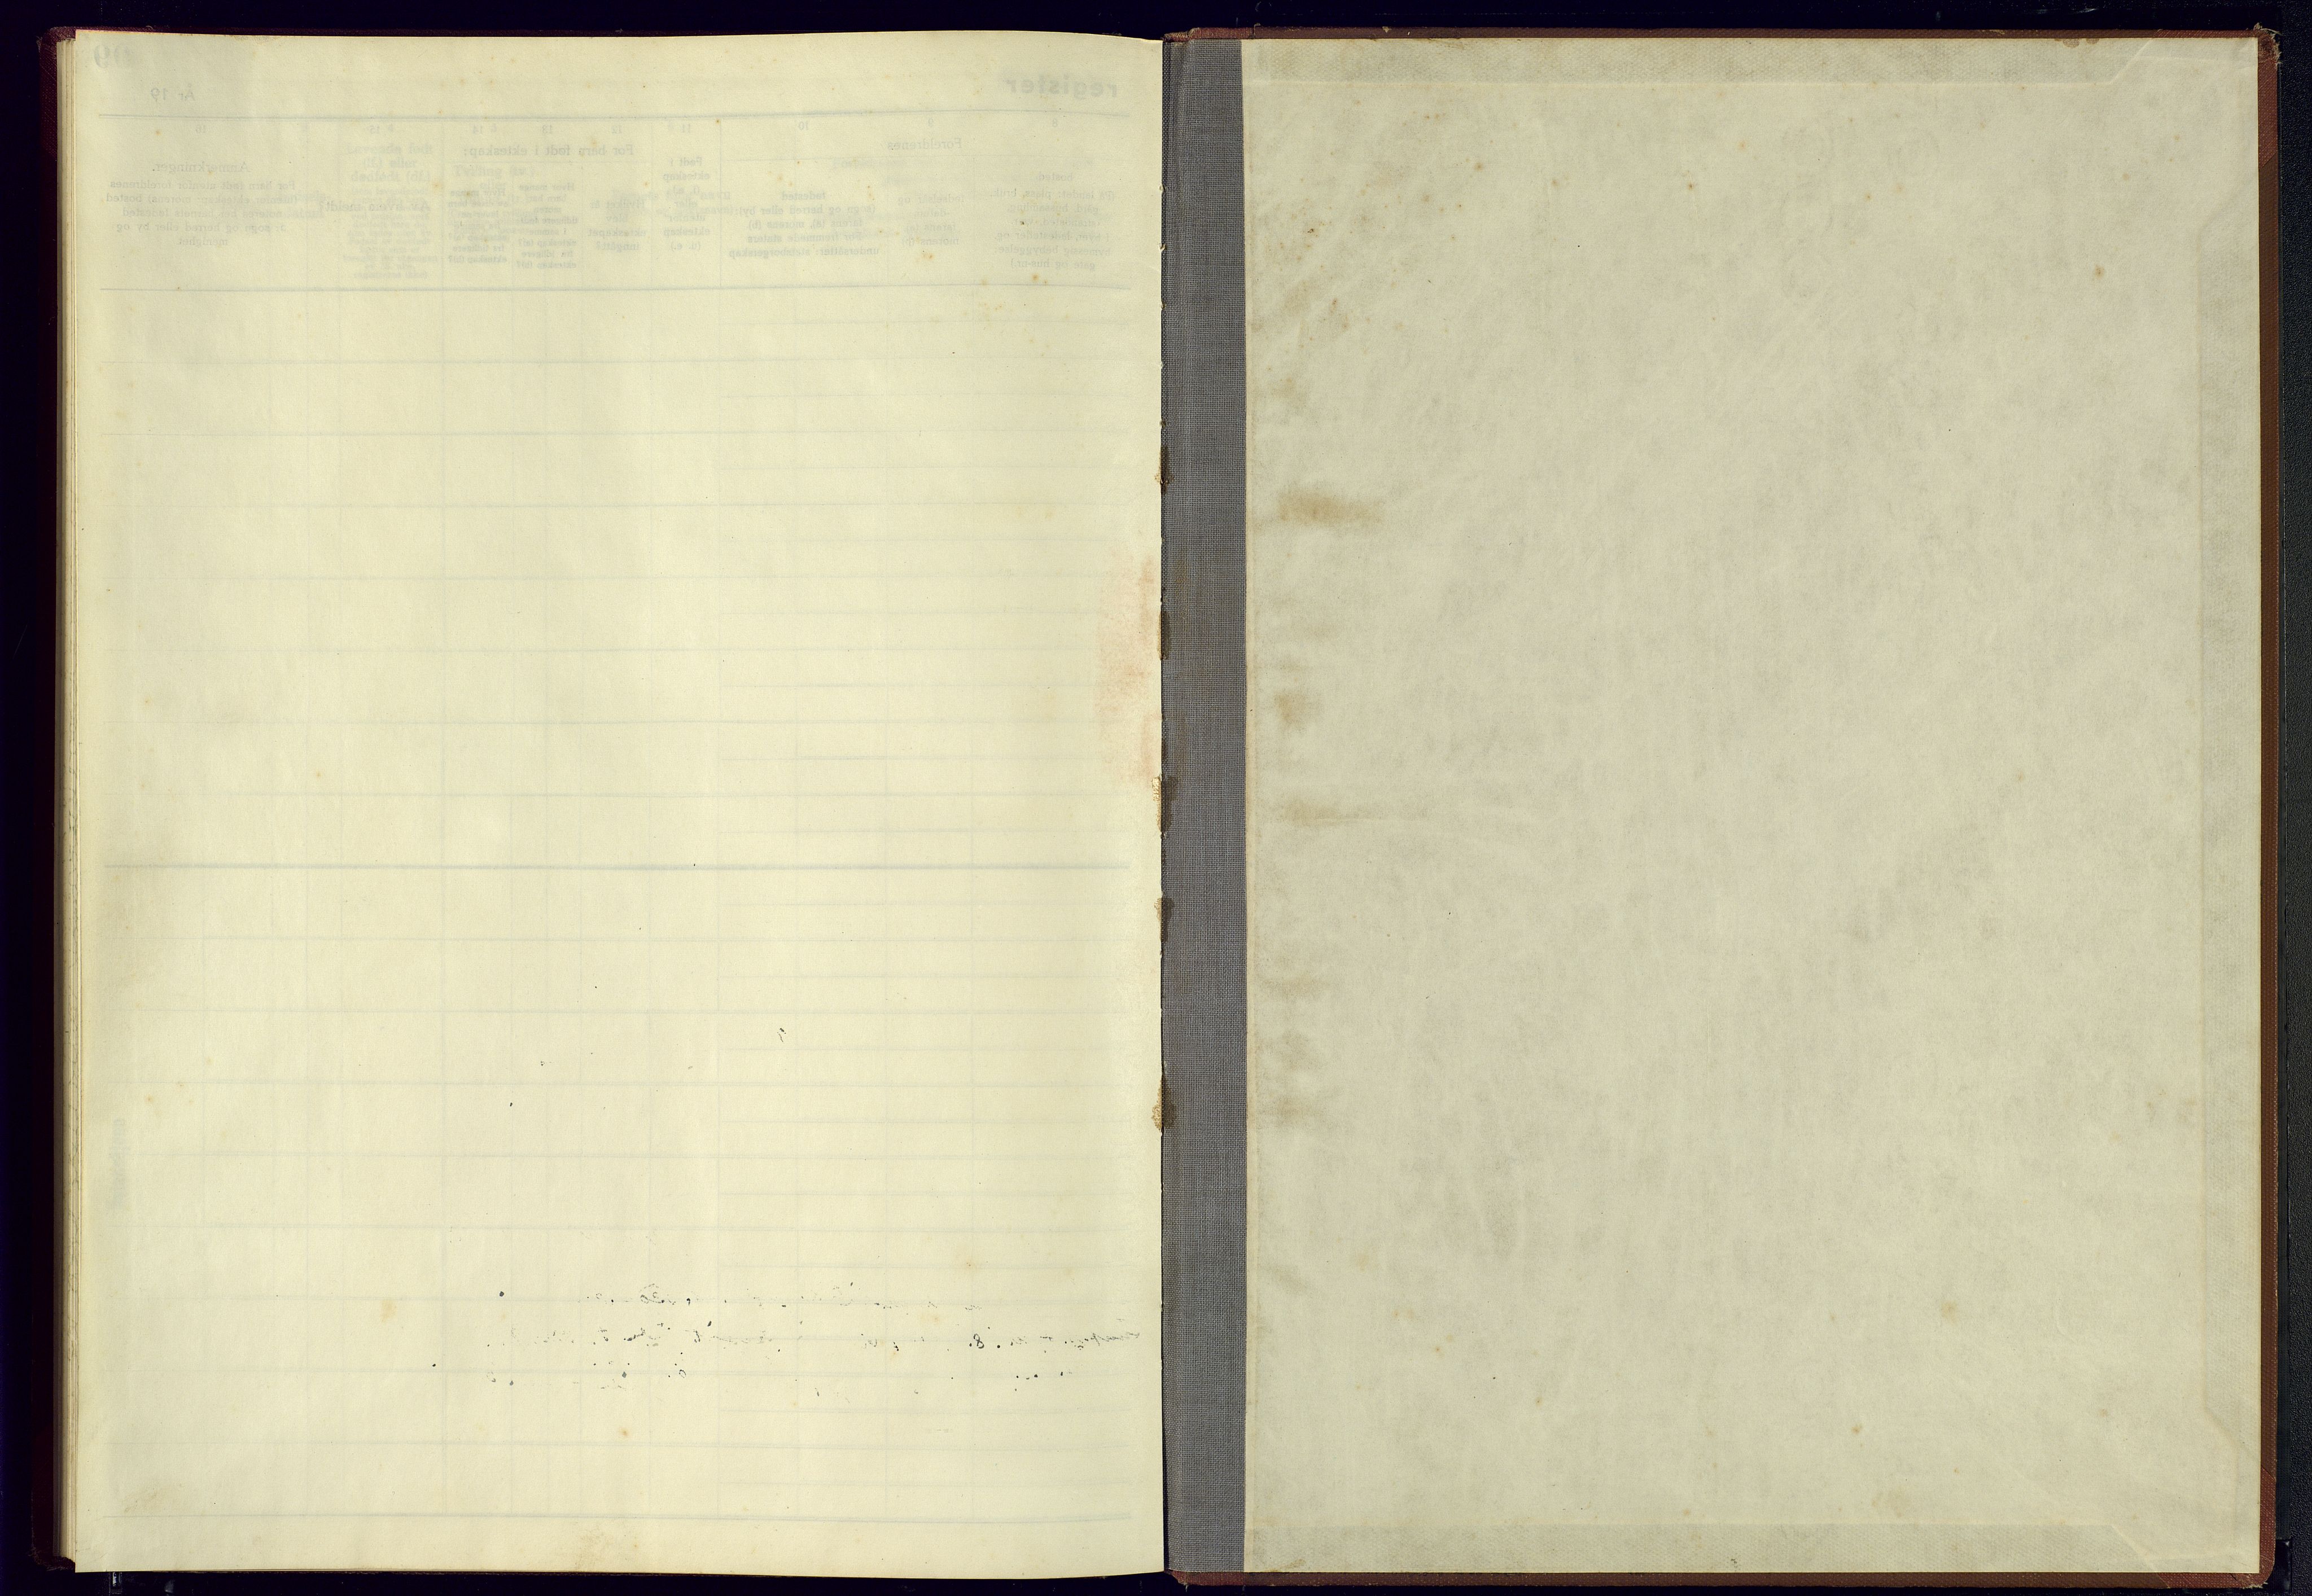 Birkenes sokneprestkontor, SAK/1111-0004/J/Jb/L0001: Birth register no. II.6.1, 1943-1951